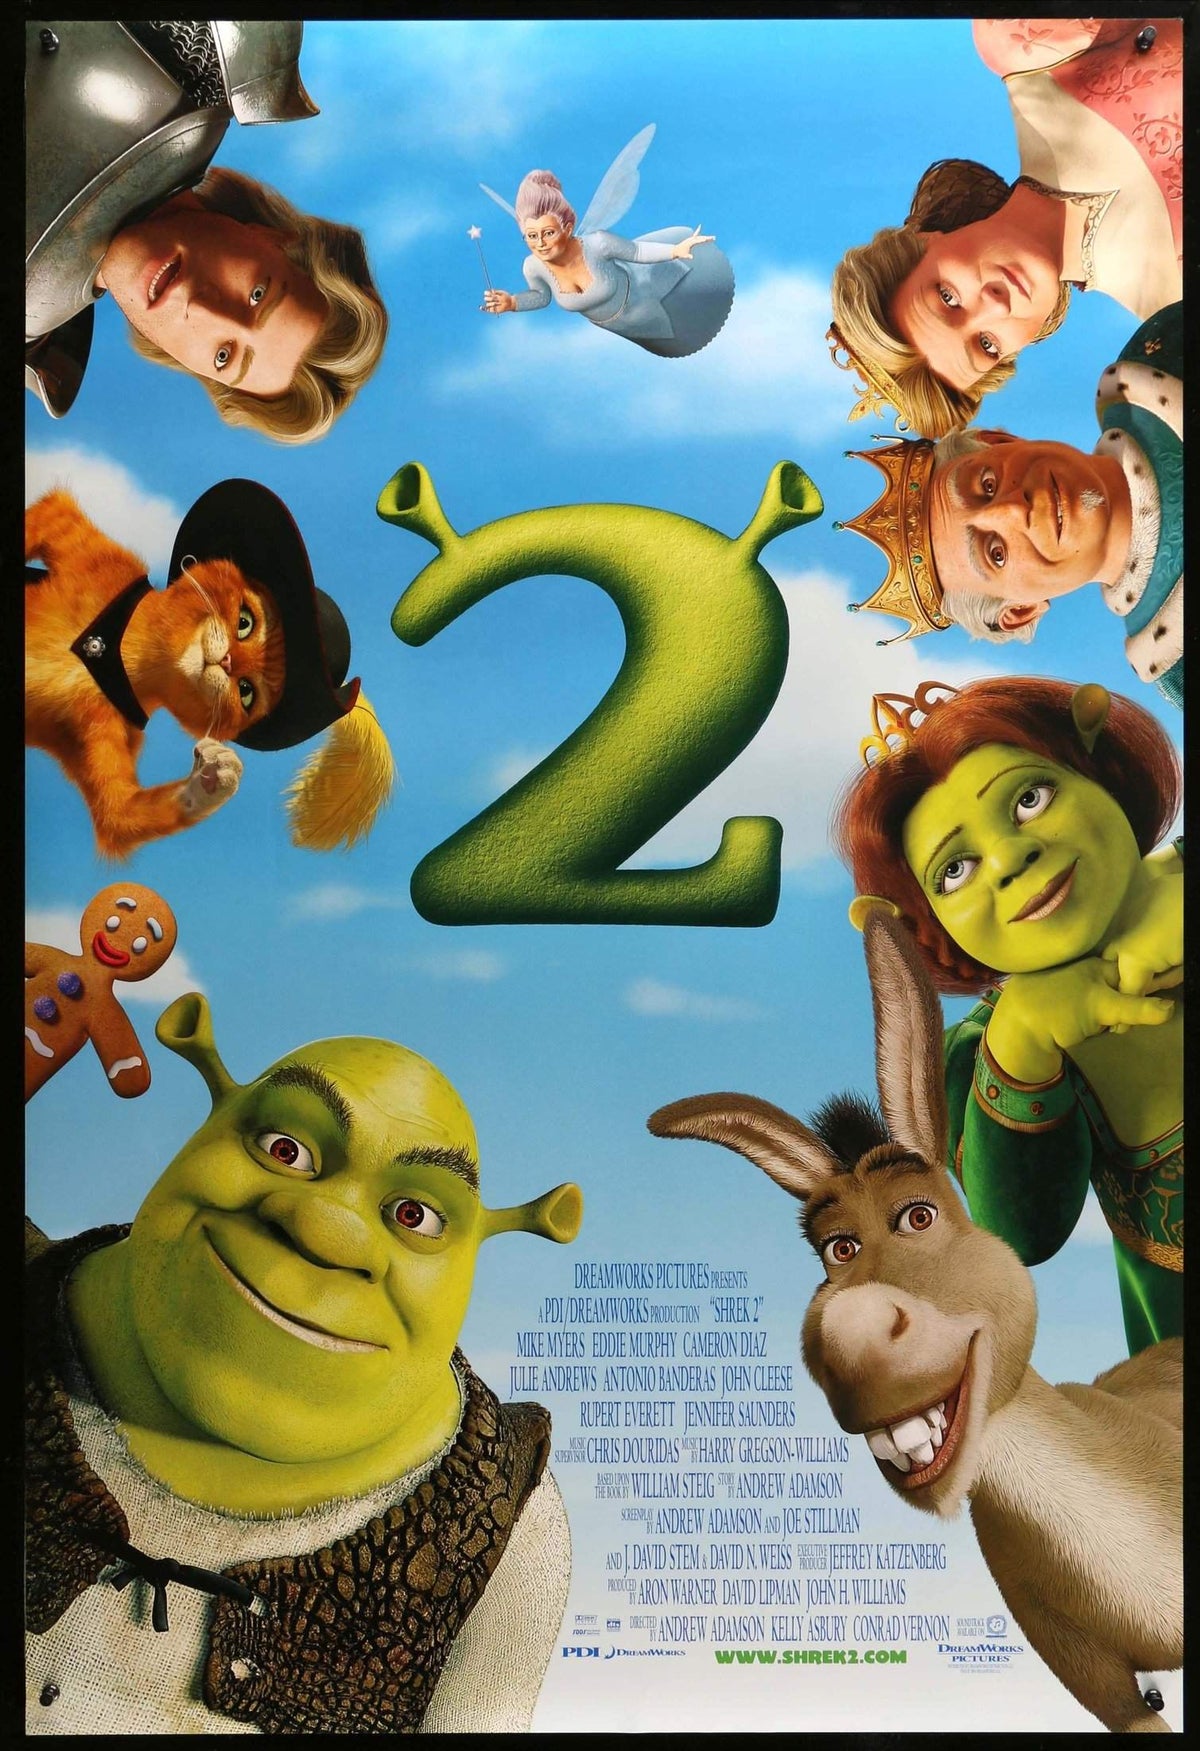 Shrek 2 (2004) original movie poster for sale at Original Film Art